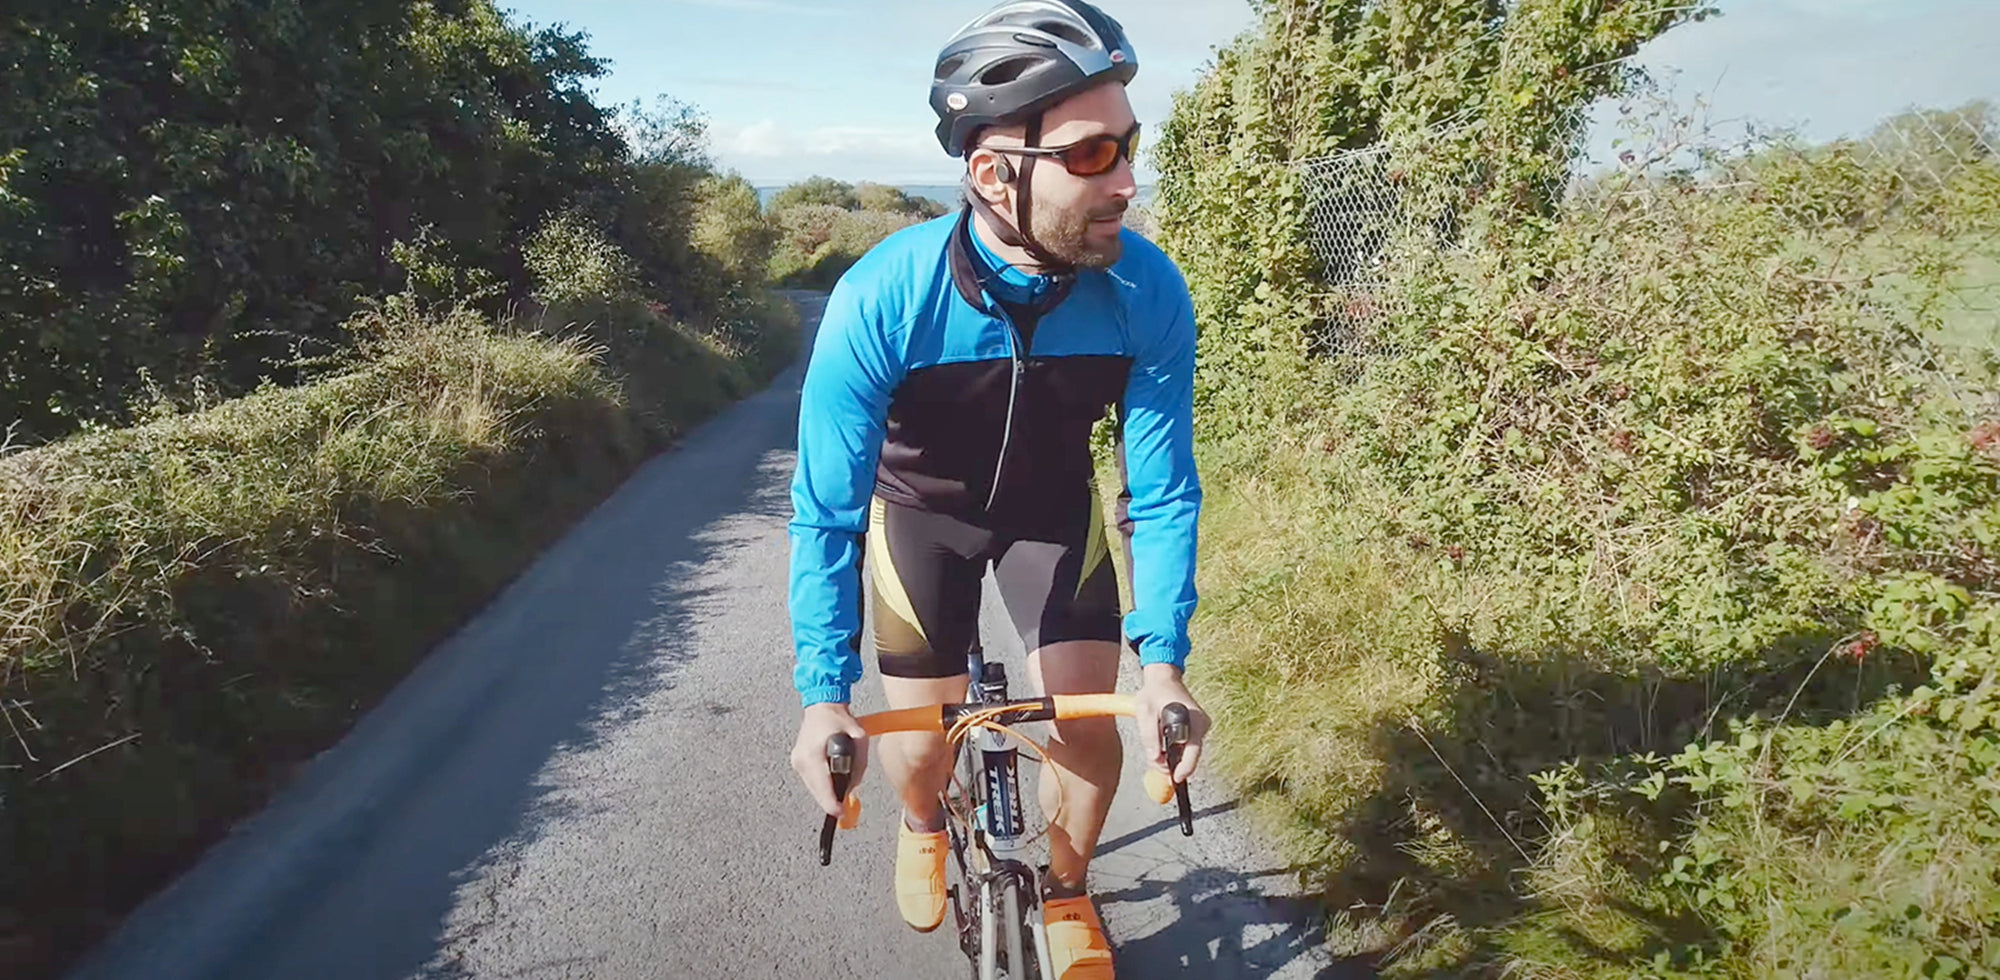 A cyclist is riding a bike wearing bone conduction headphones